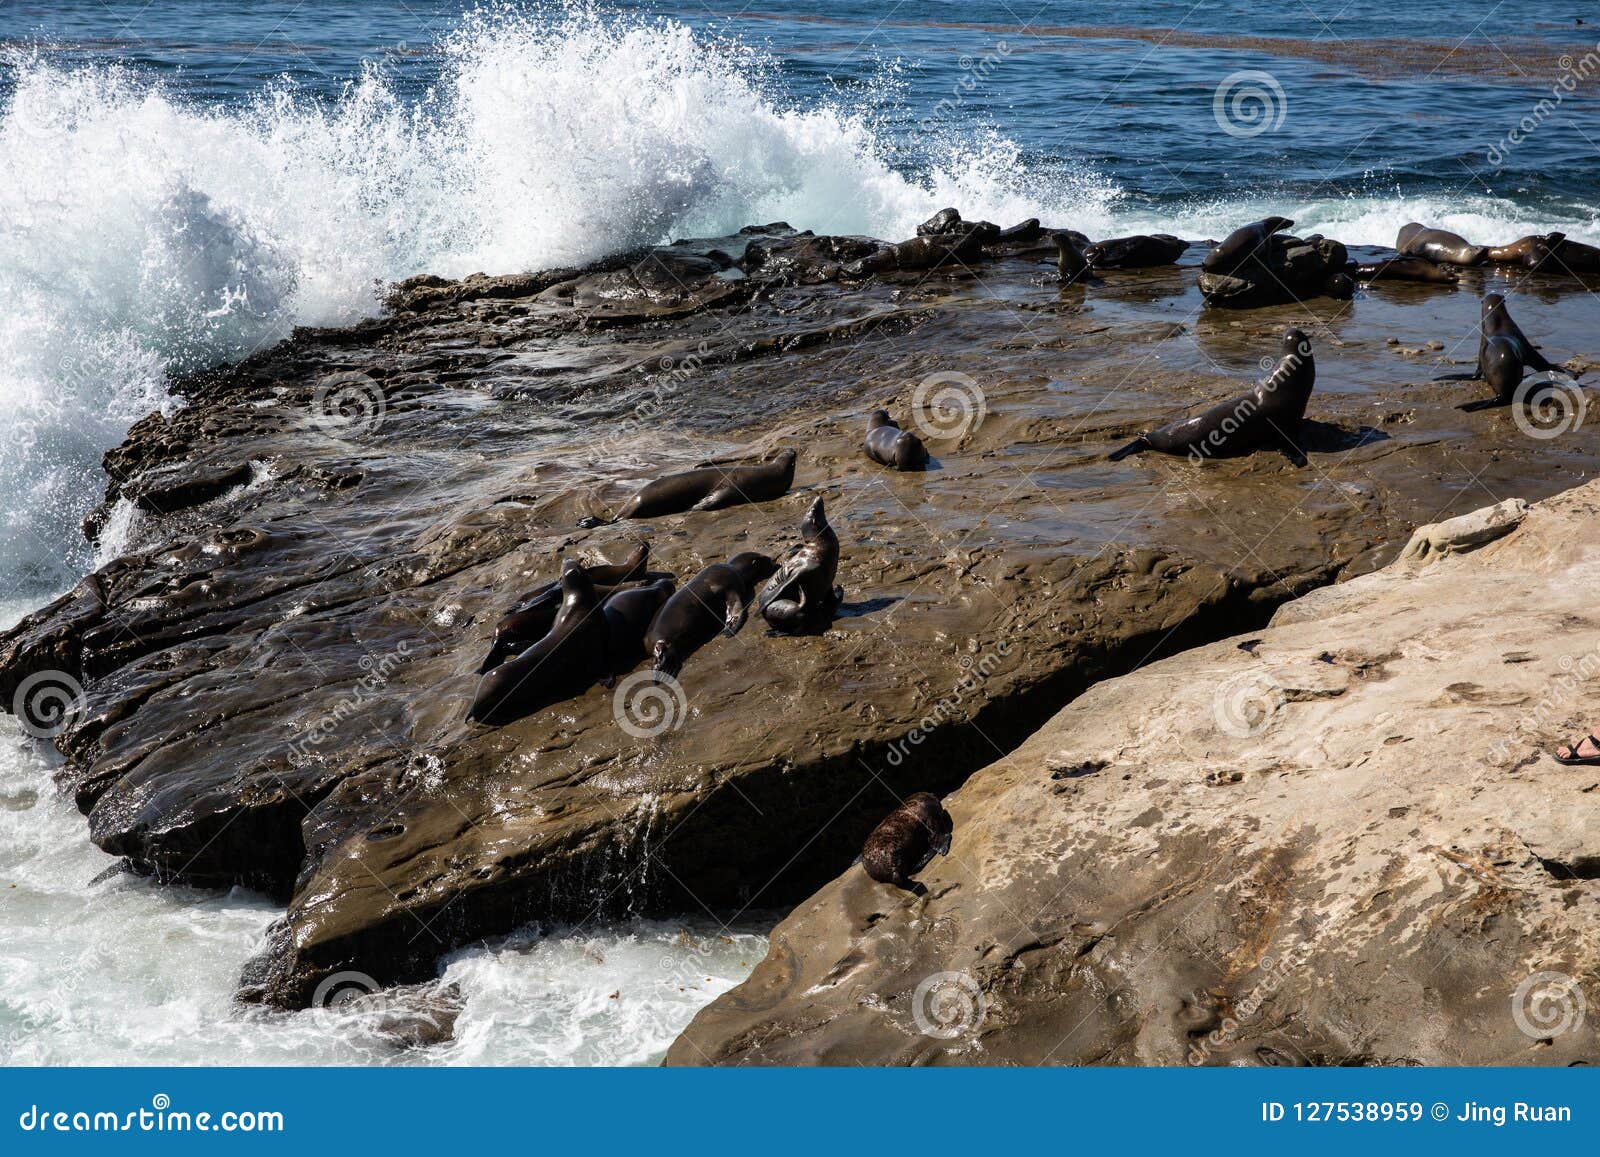 seal or sea lion